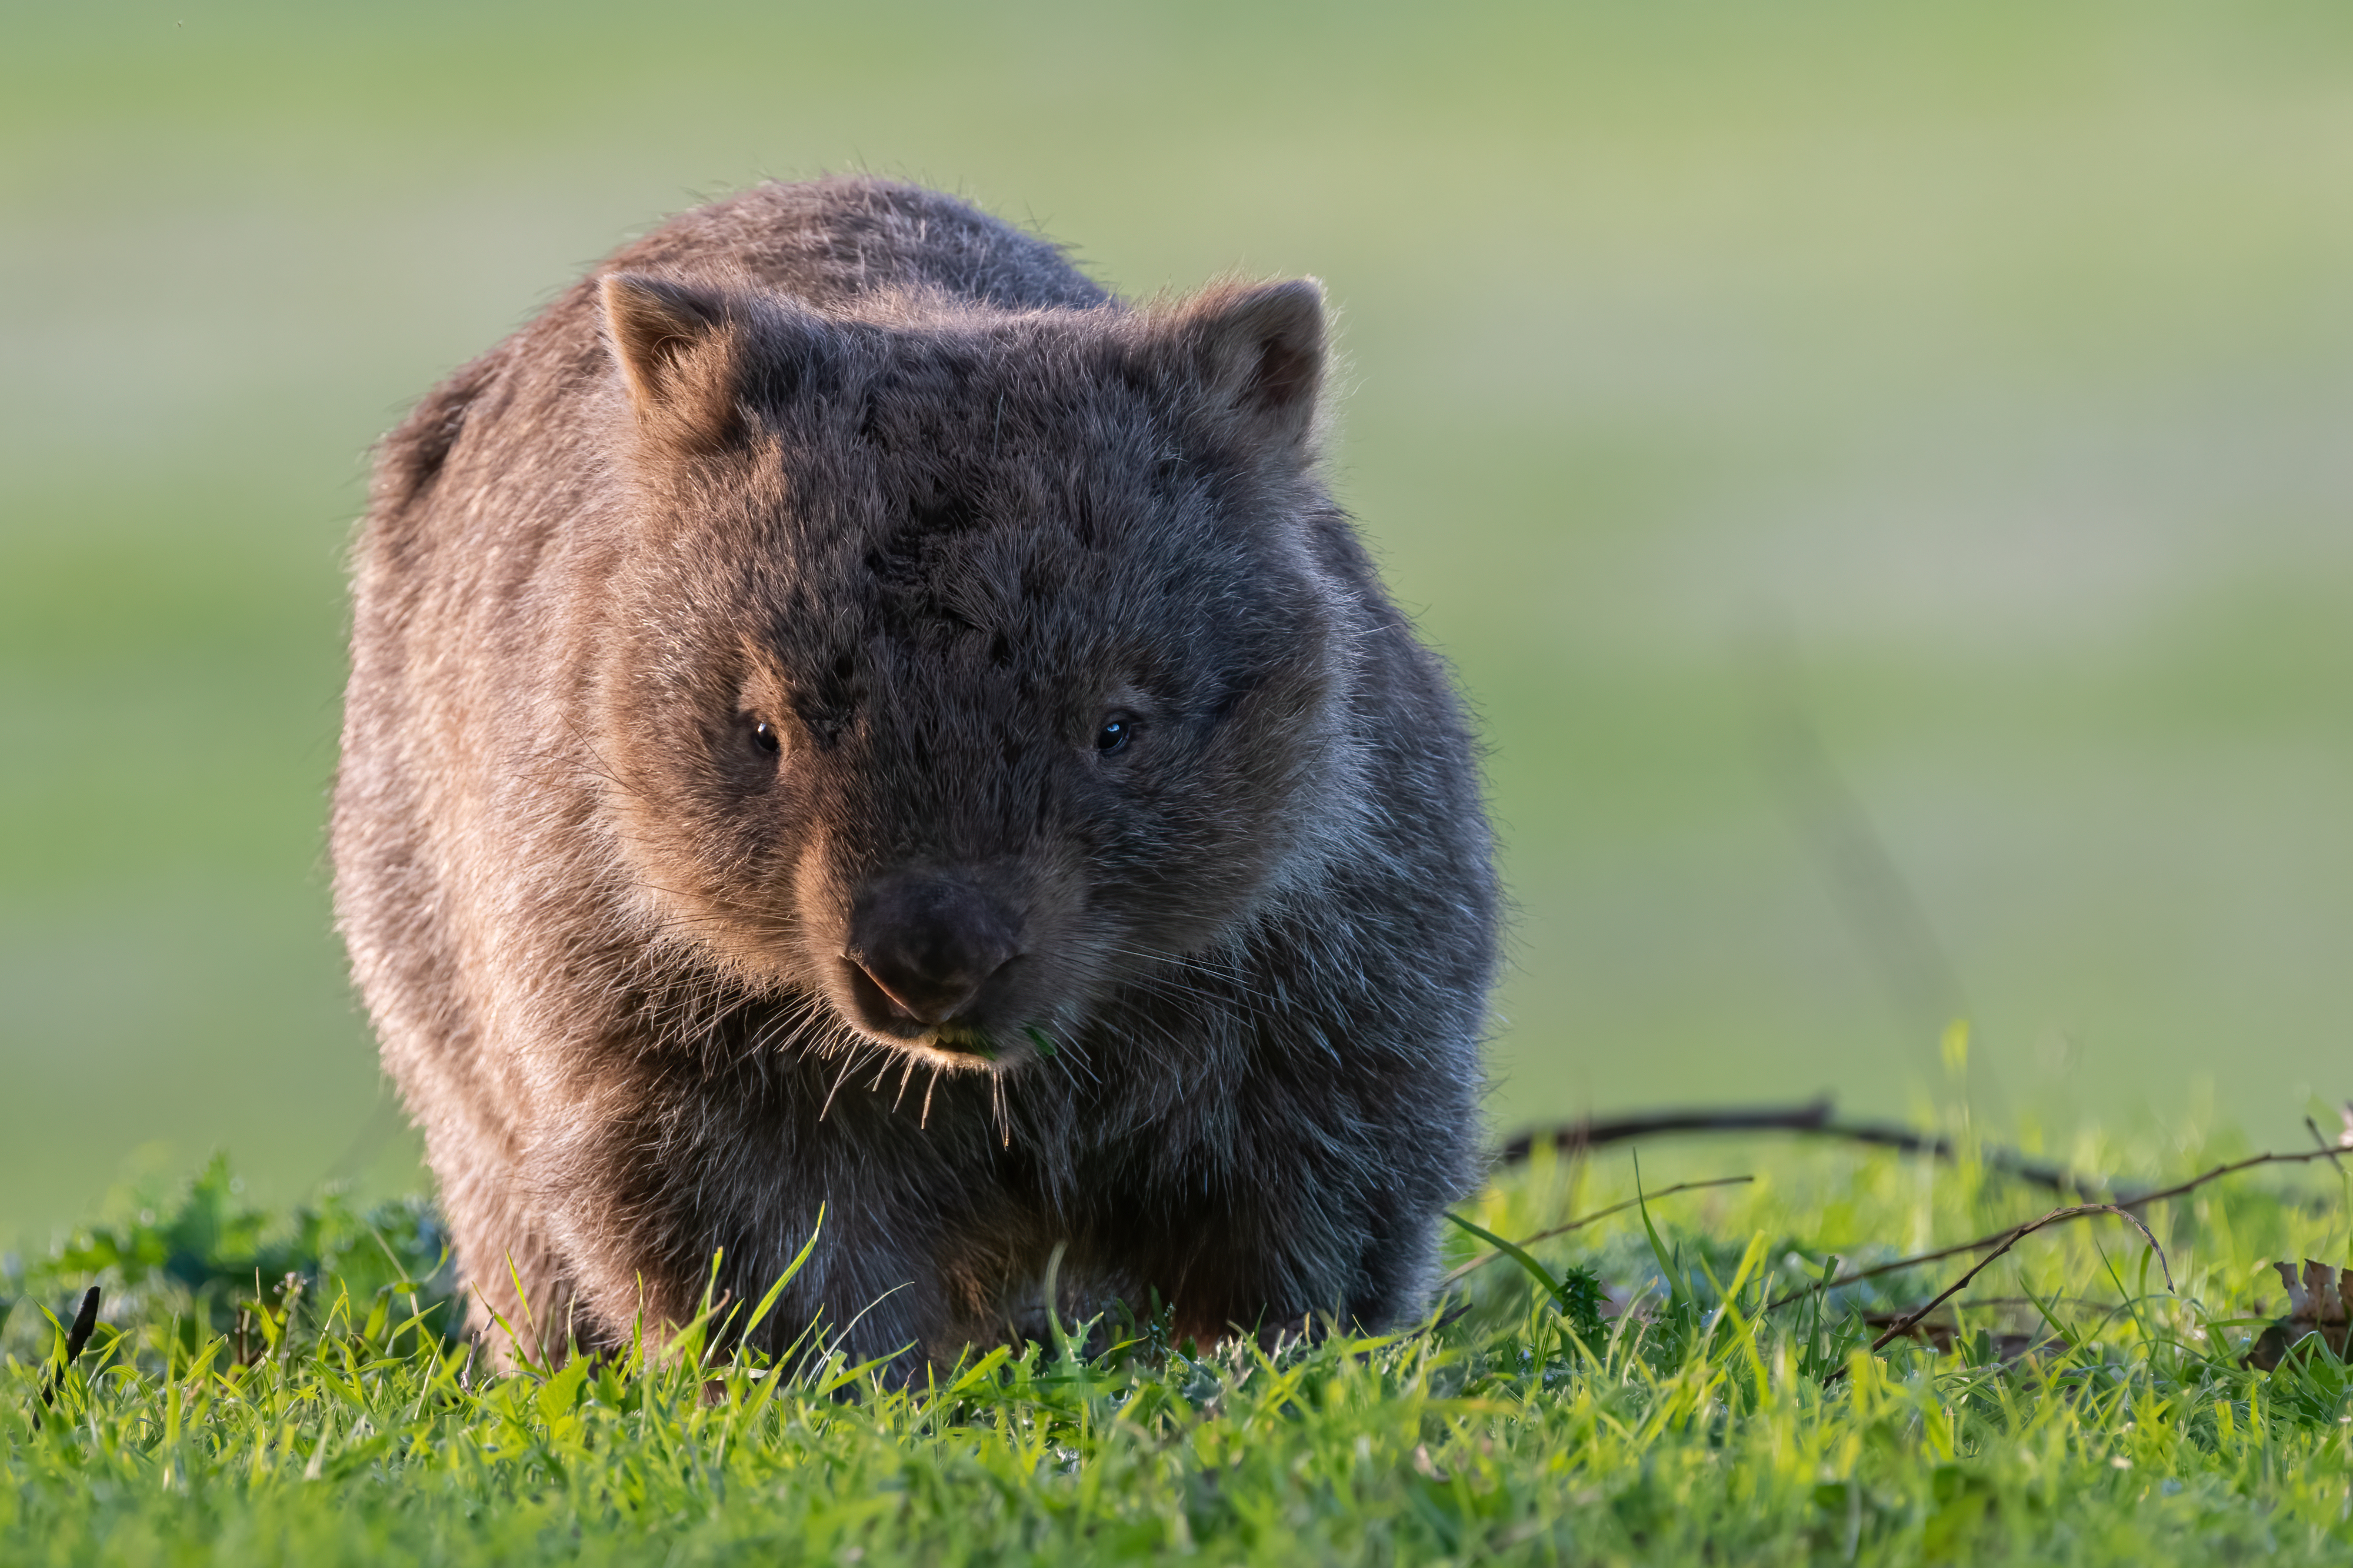 A wombat on grass